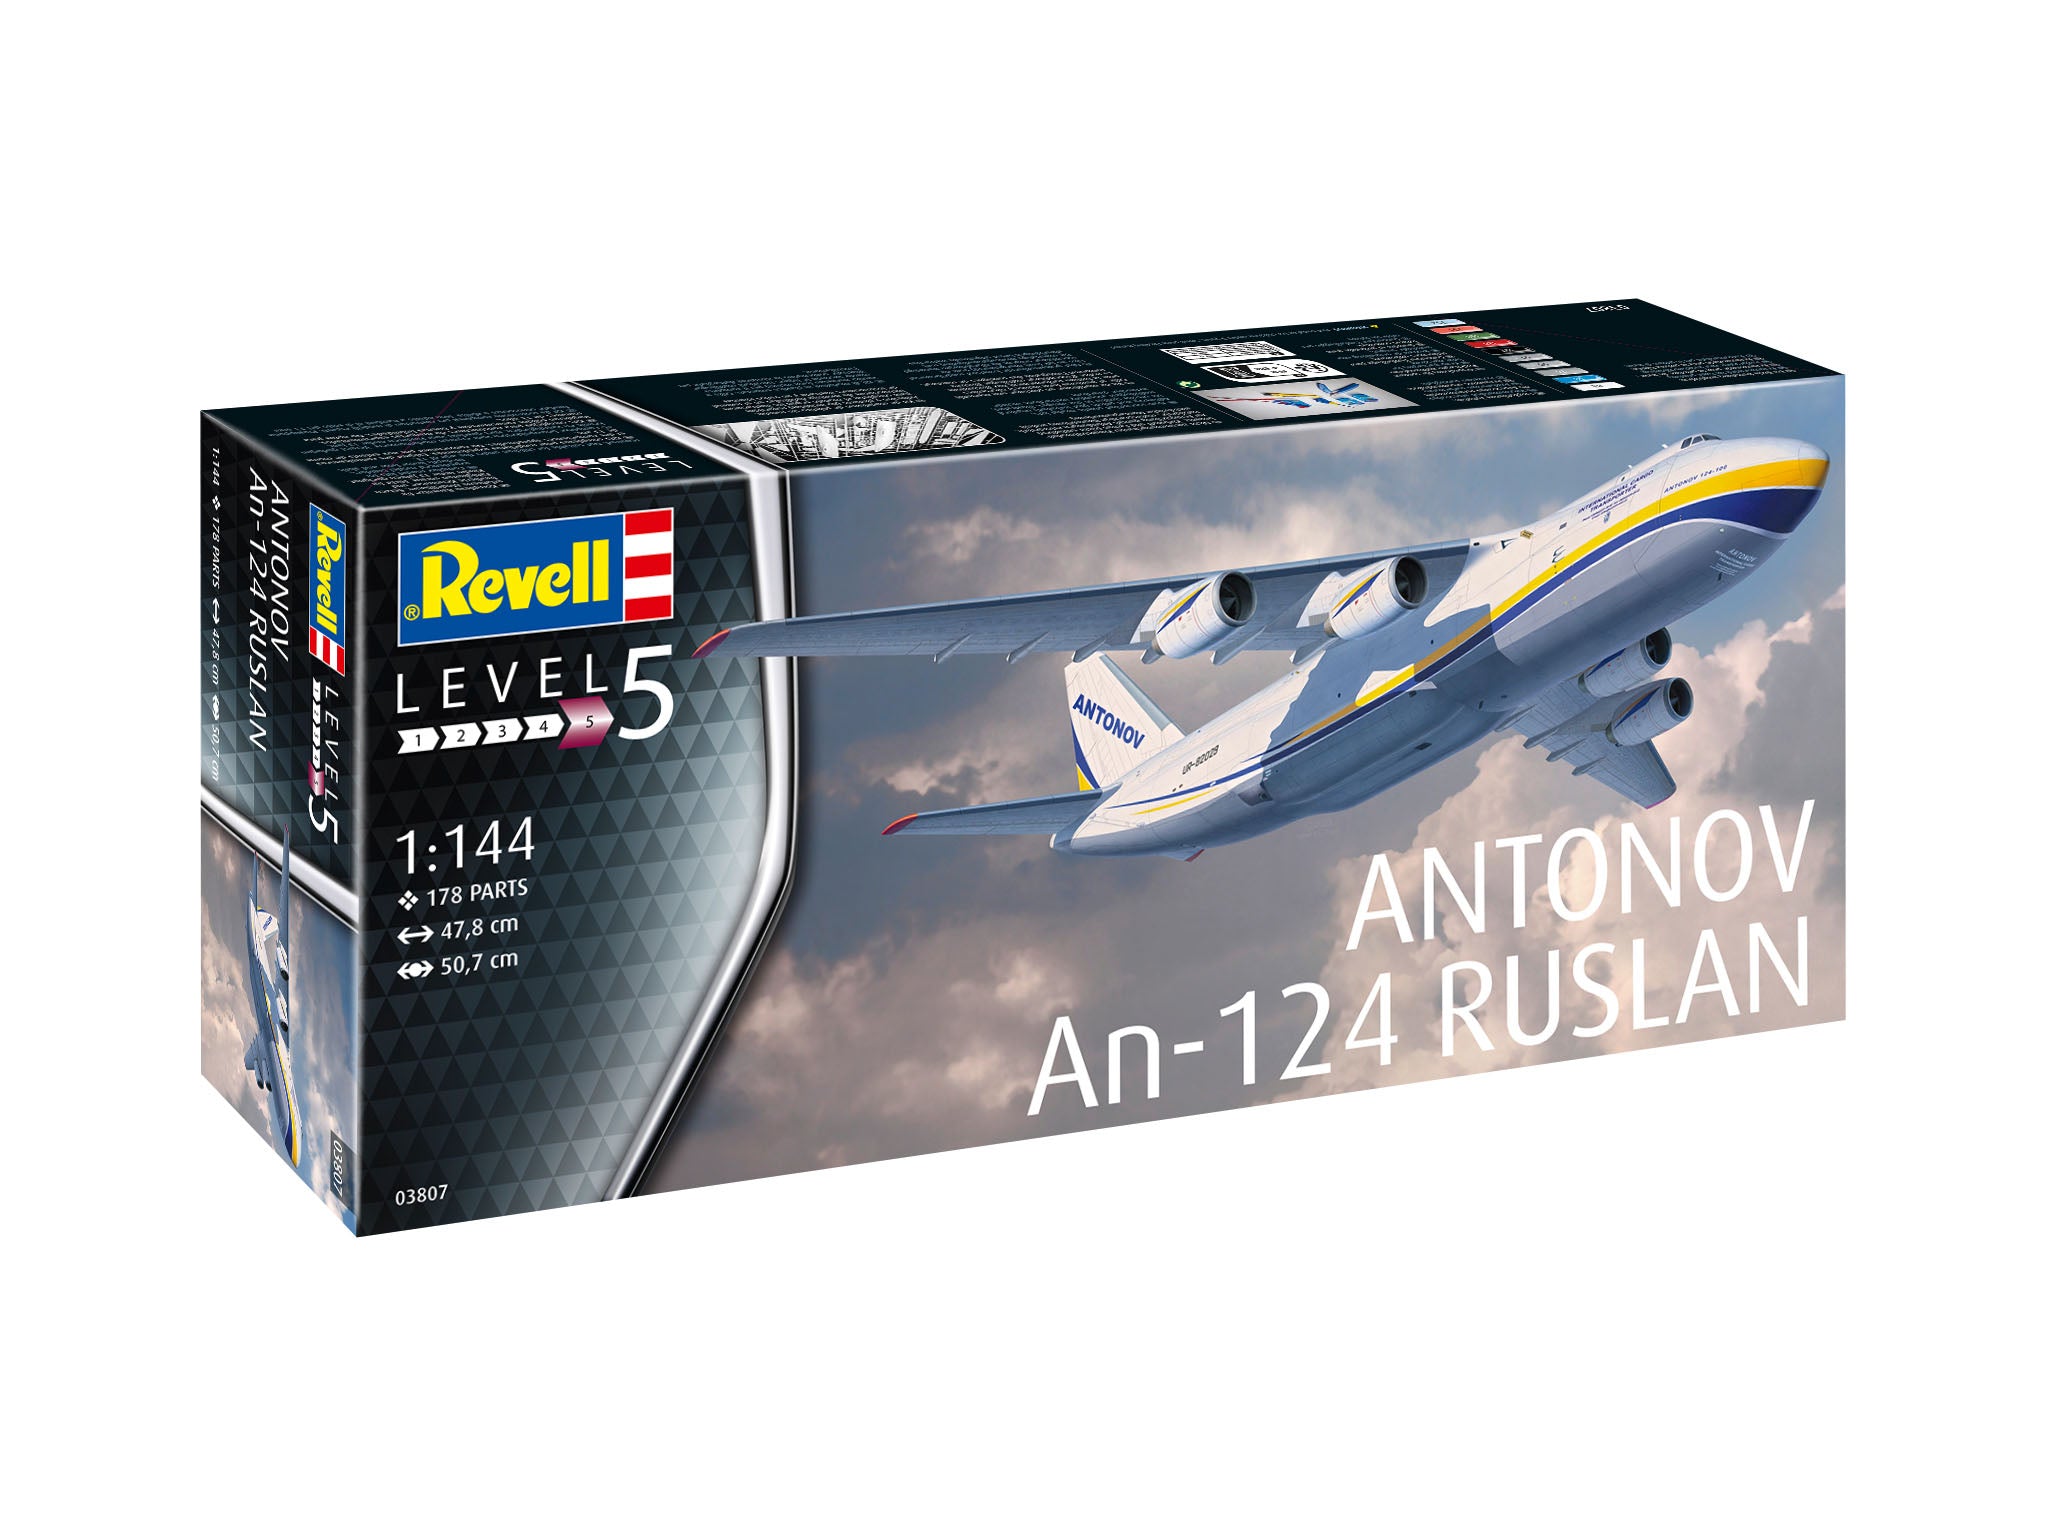 Antanov AN-124 Ruslan 1:144 Scale Kit